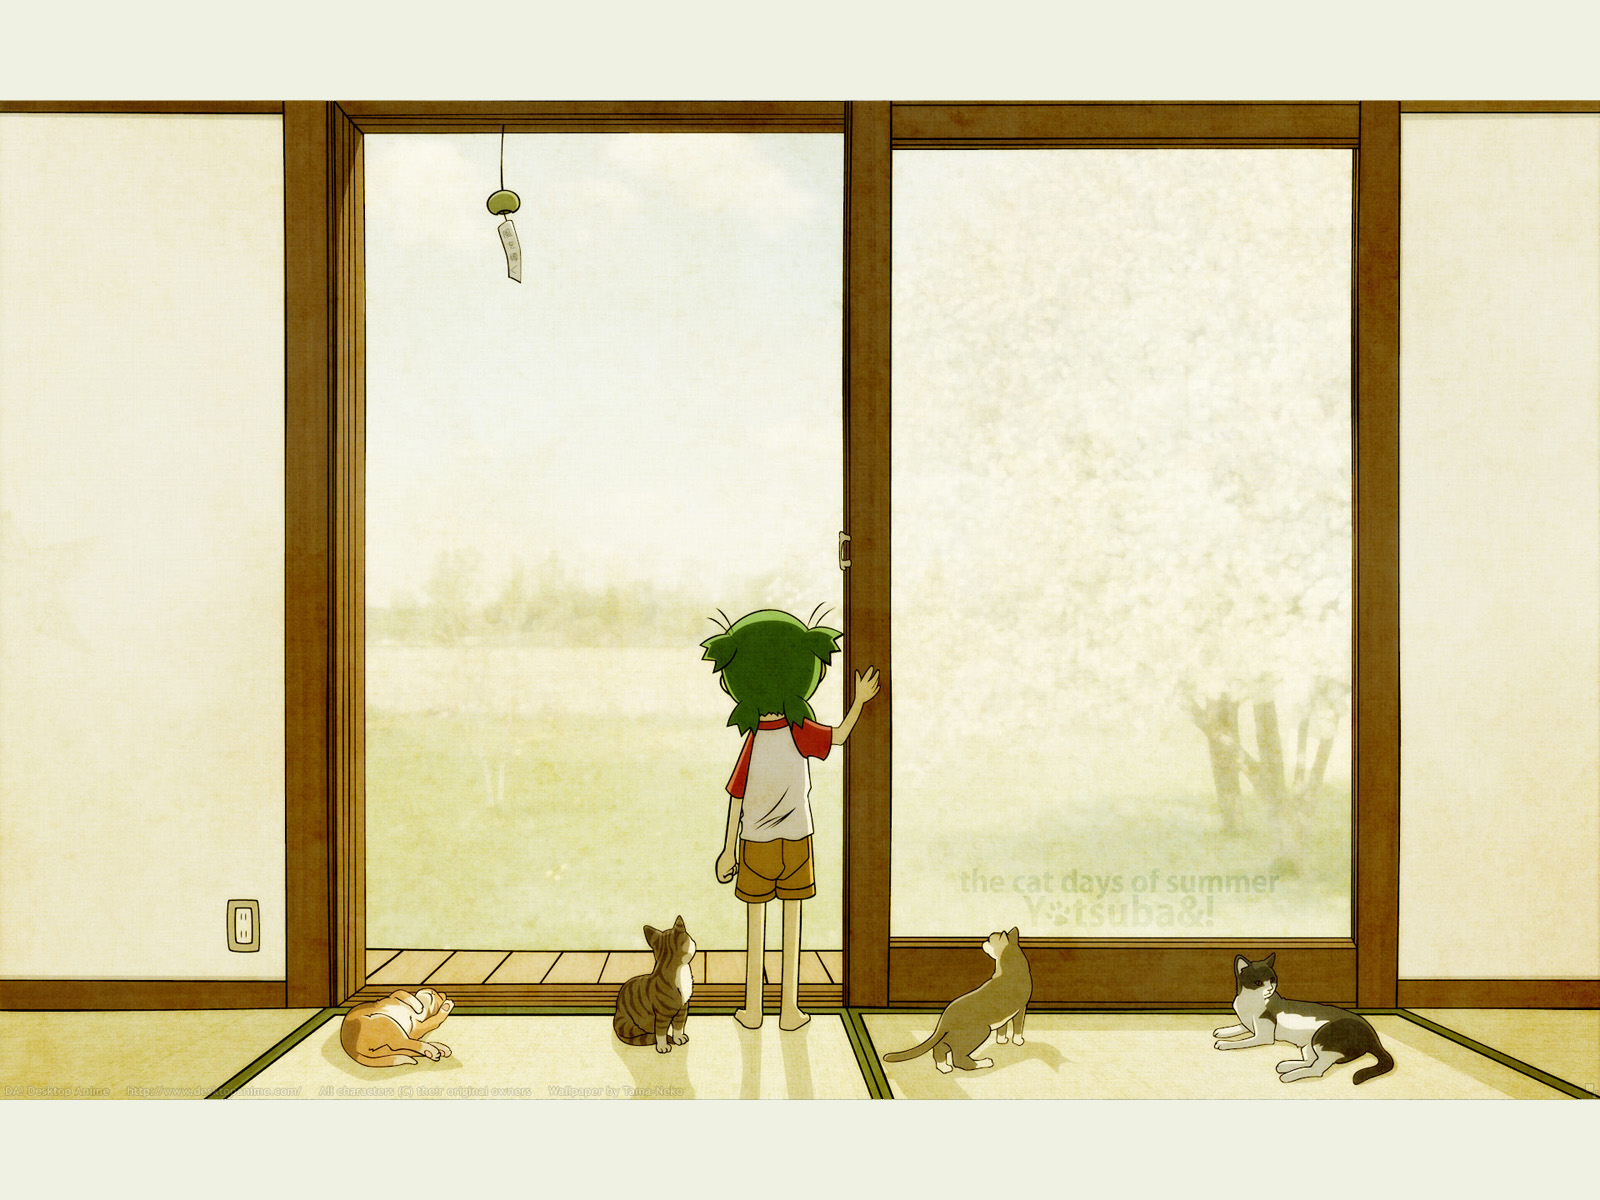 The Cat Days Of Summer Yotsuba Wallpaper Hd Hd Wallpaper Backgrounds Download